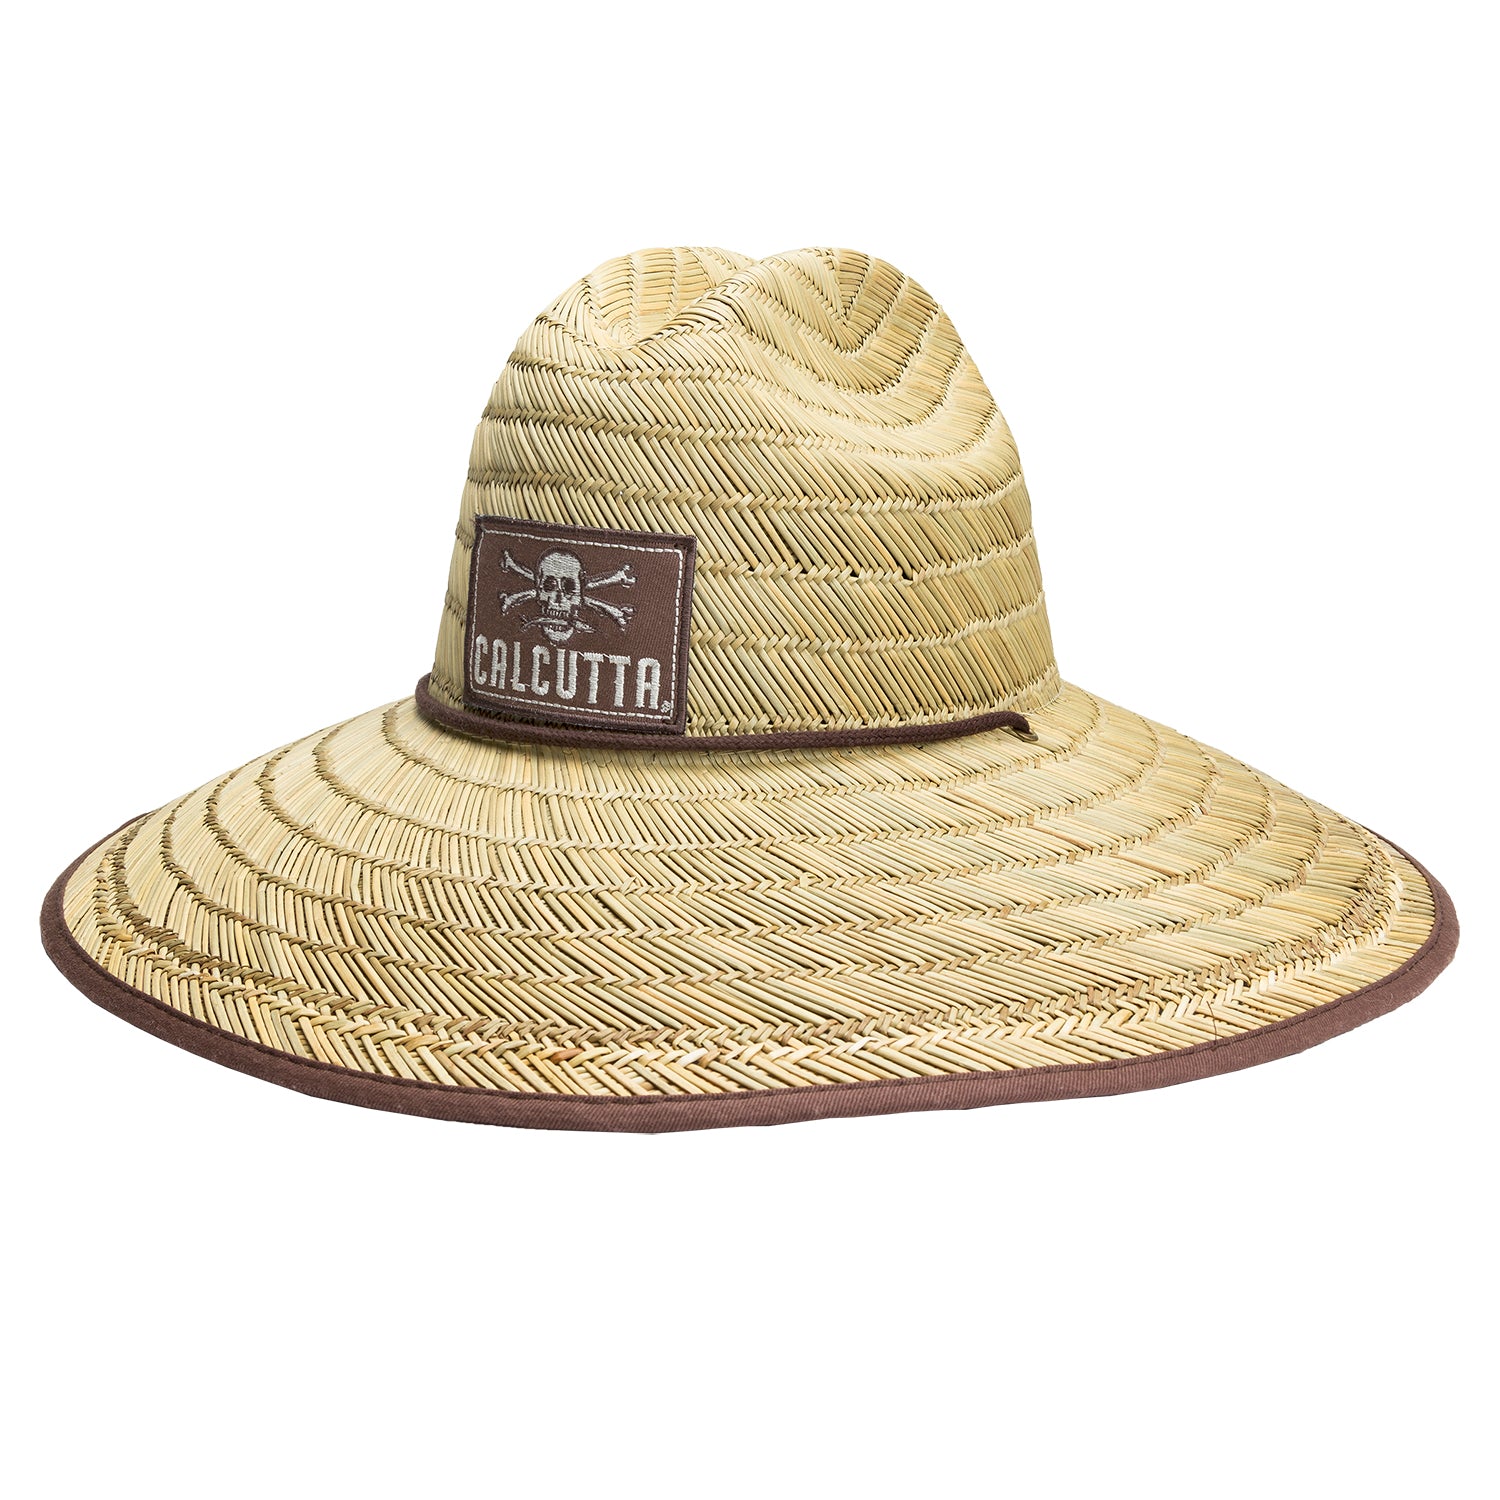 Calcutta straw hat